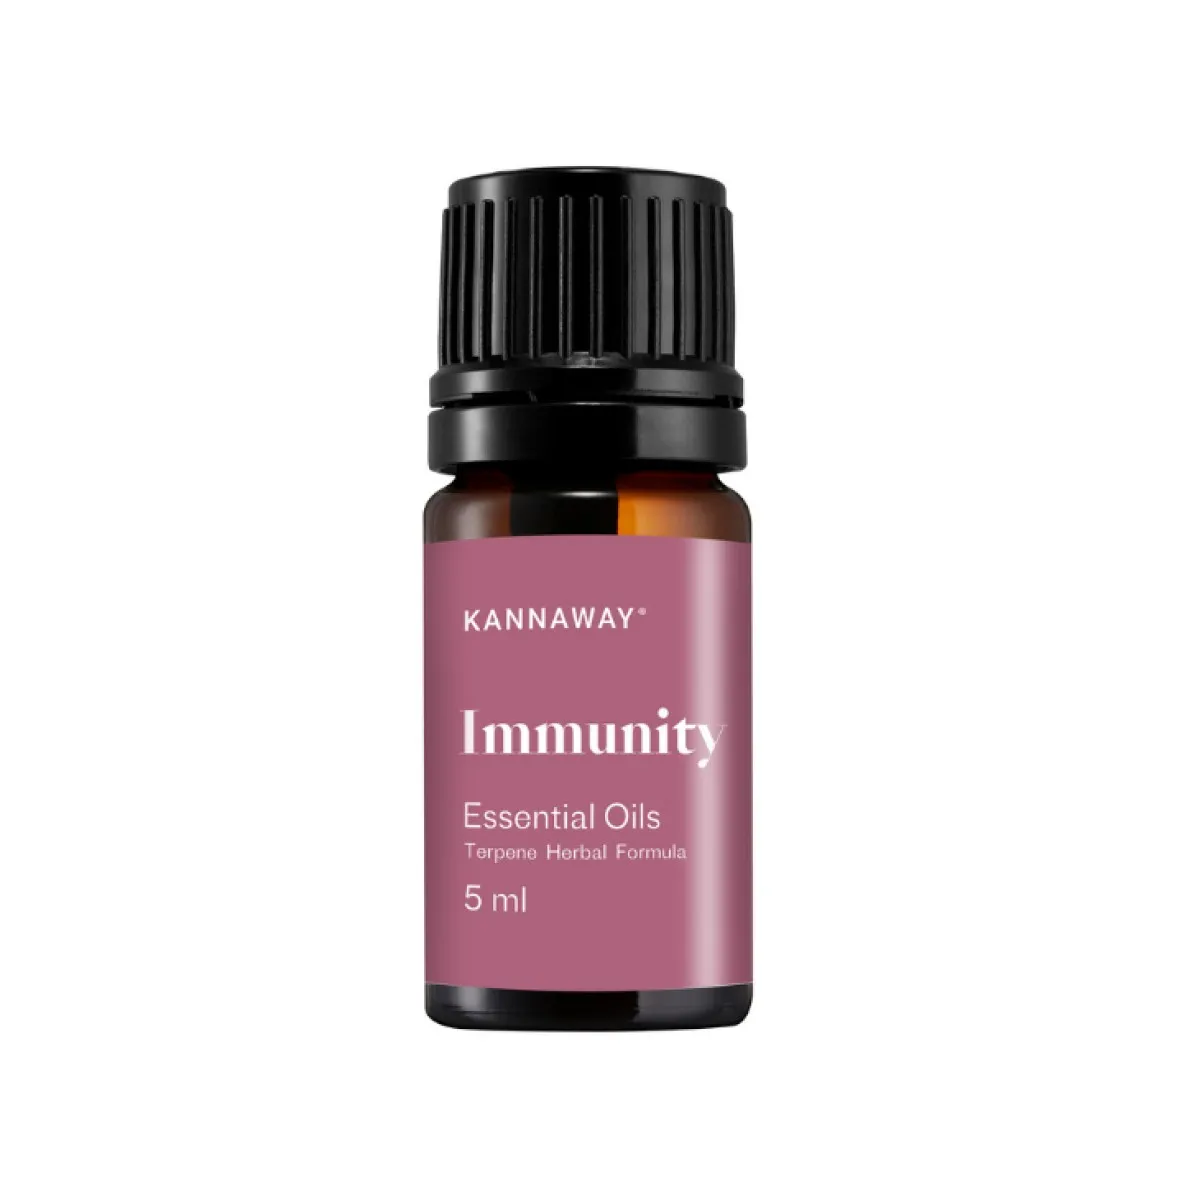 Kannaway Essential Oil Immunity Immunität